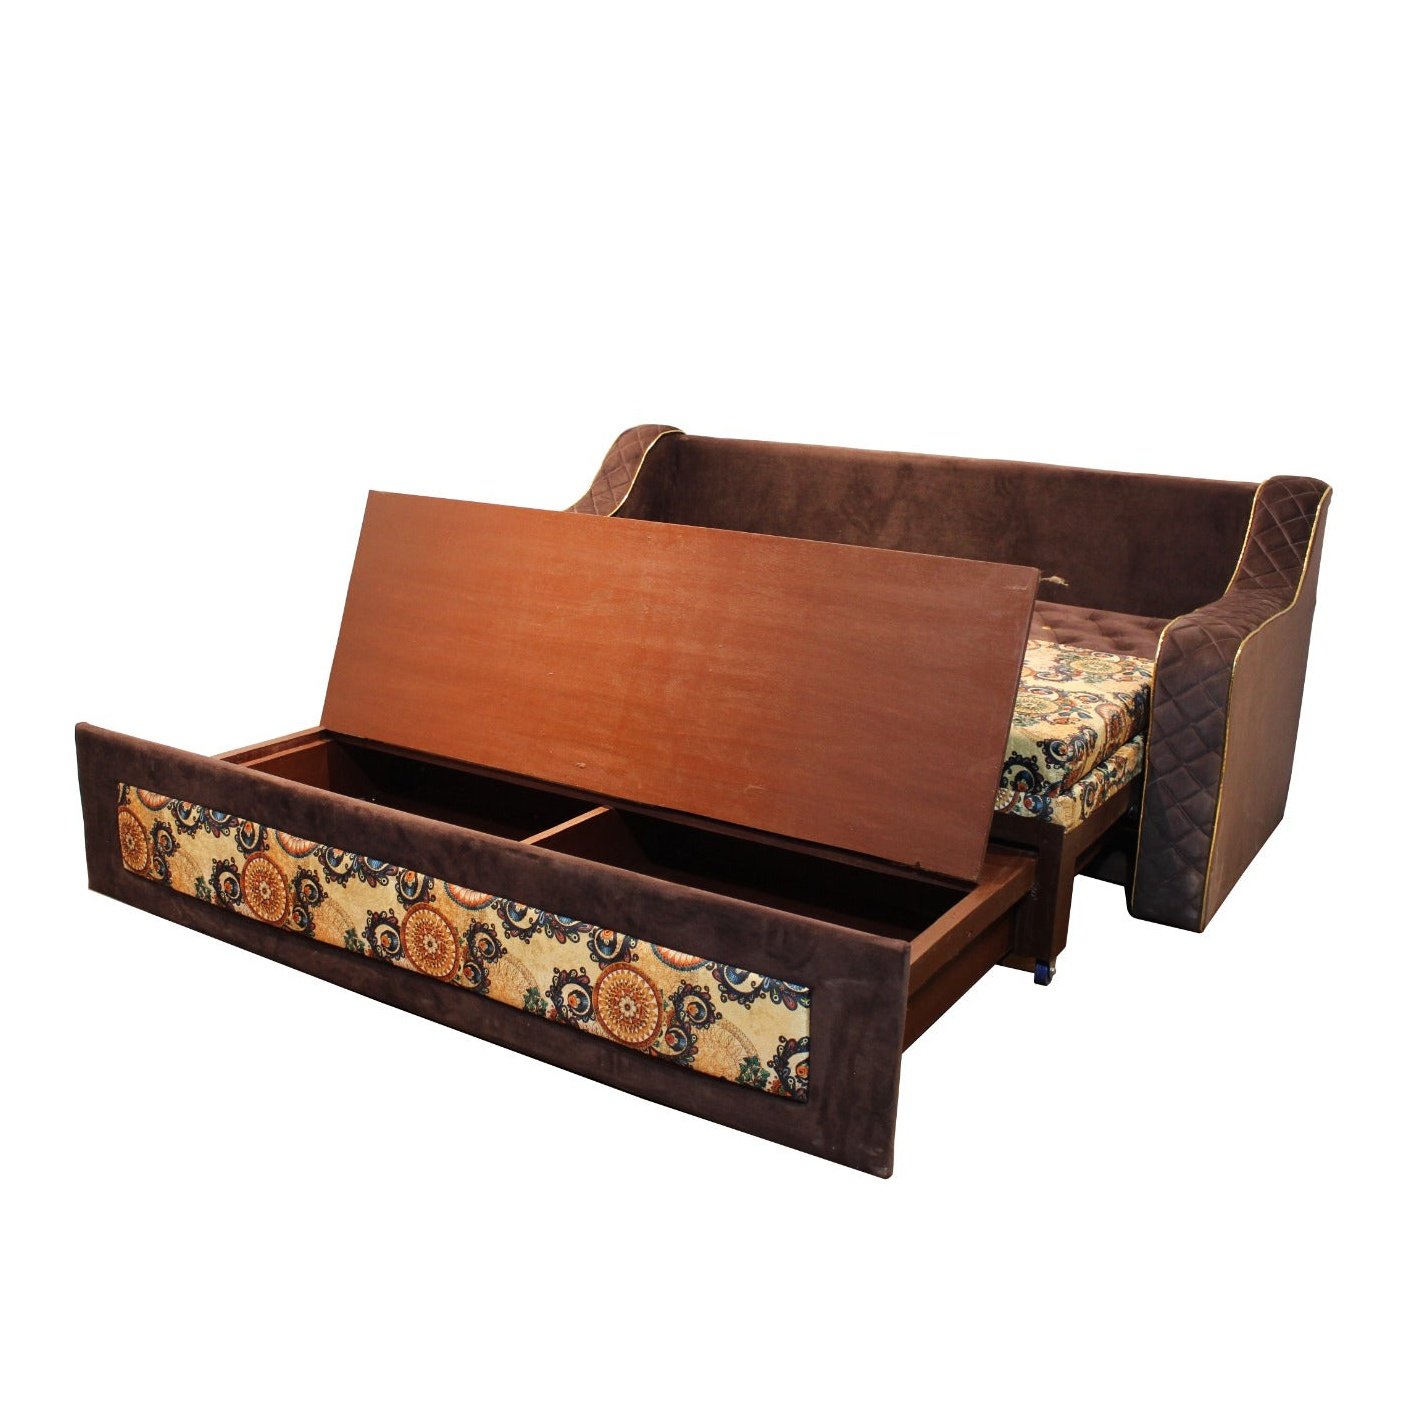 KN-CUBA-C;QUILT SOFA CUM BED Mobel Furniture